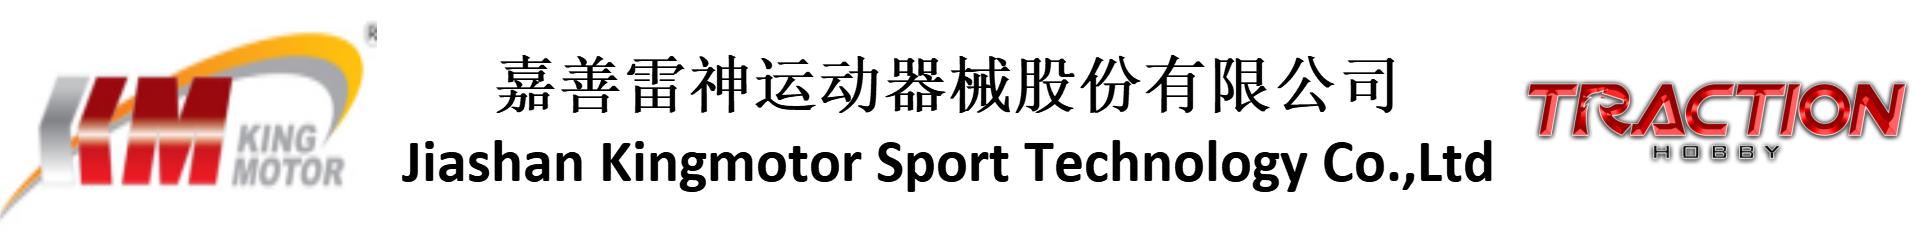 Jiashan Kingmotor Sport Technology Co.,Ltd.